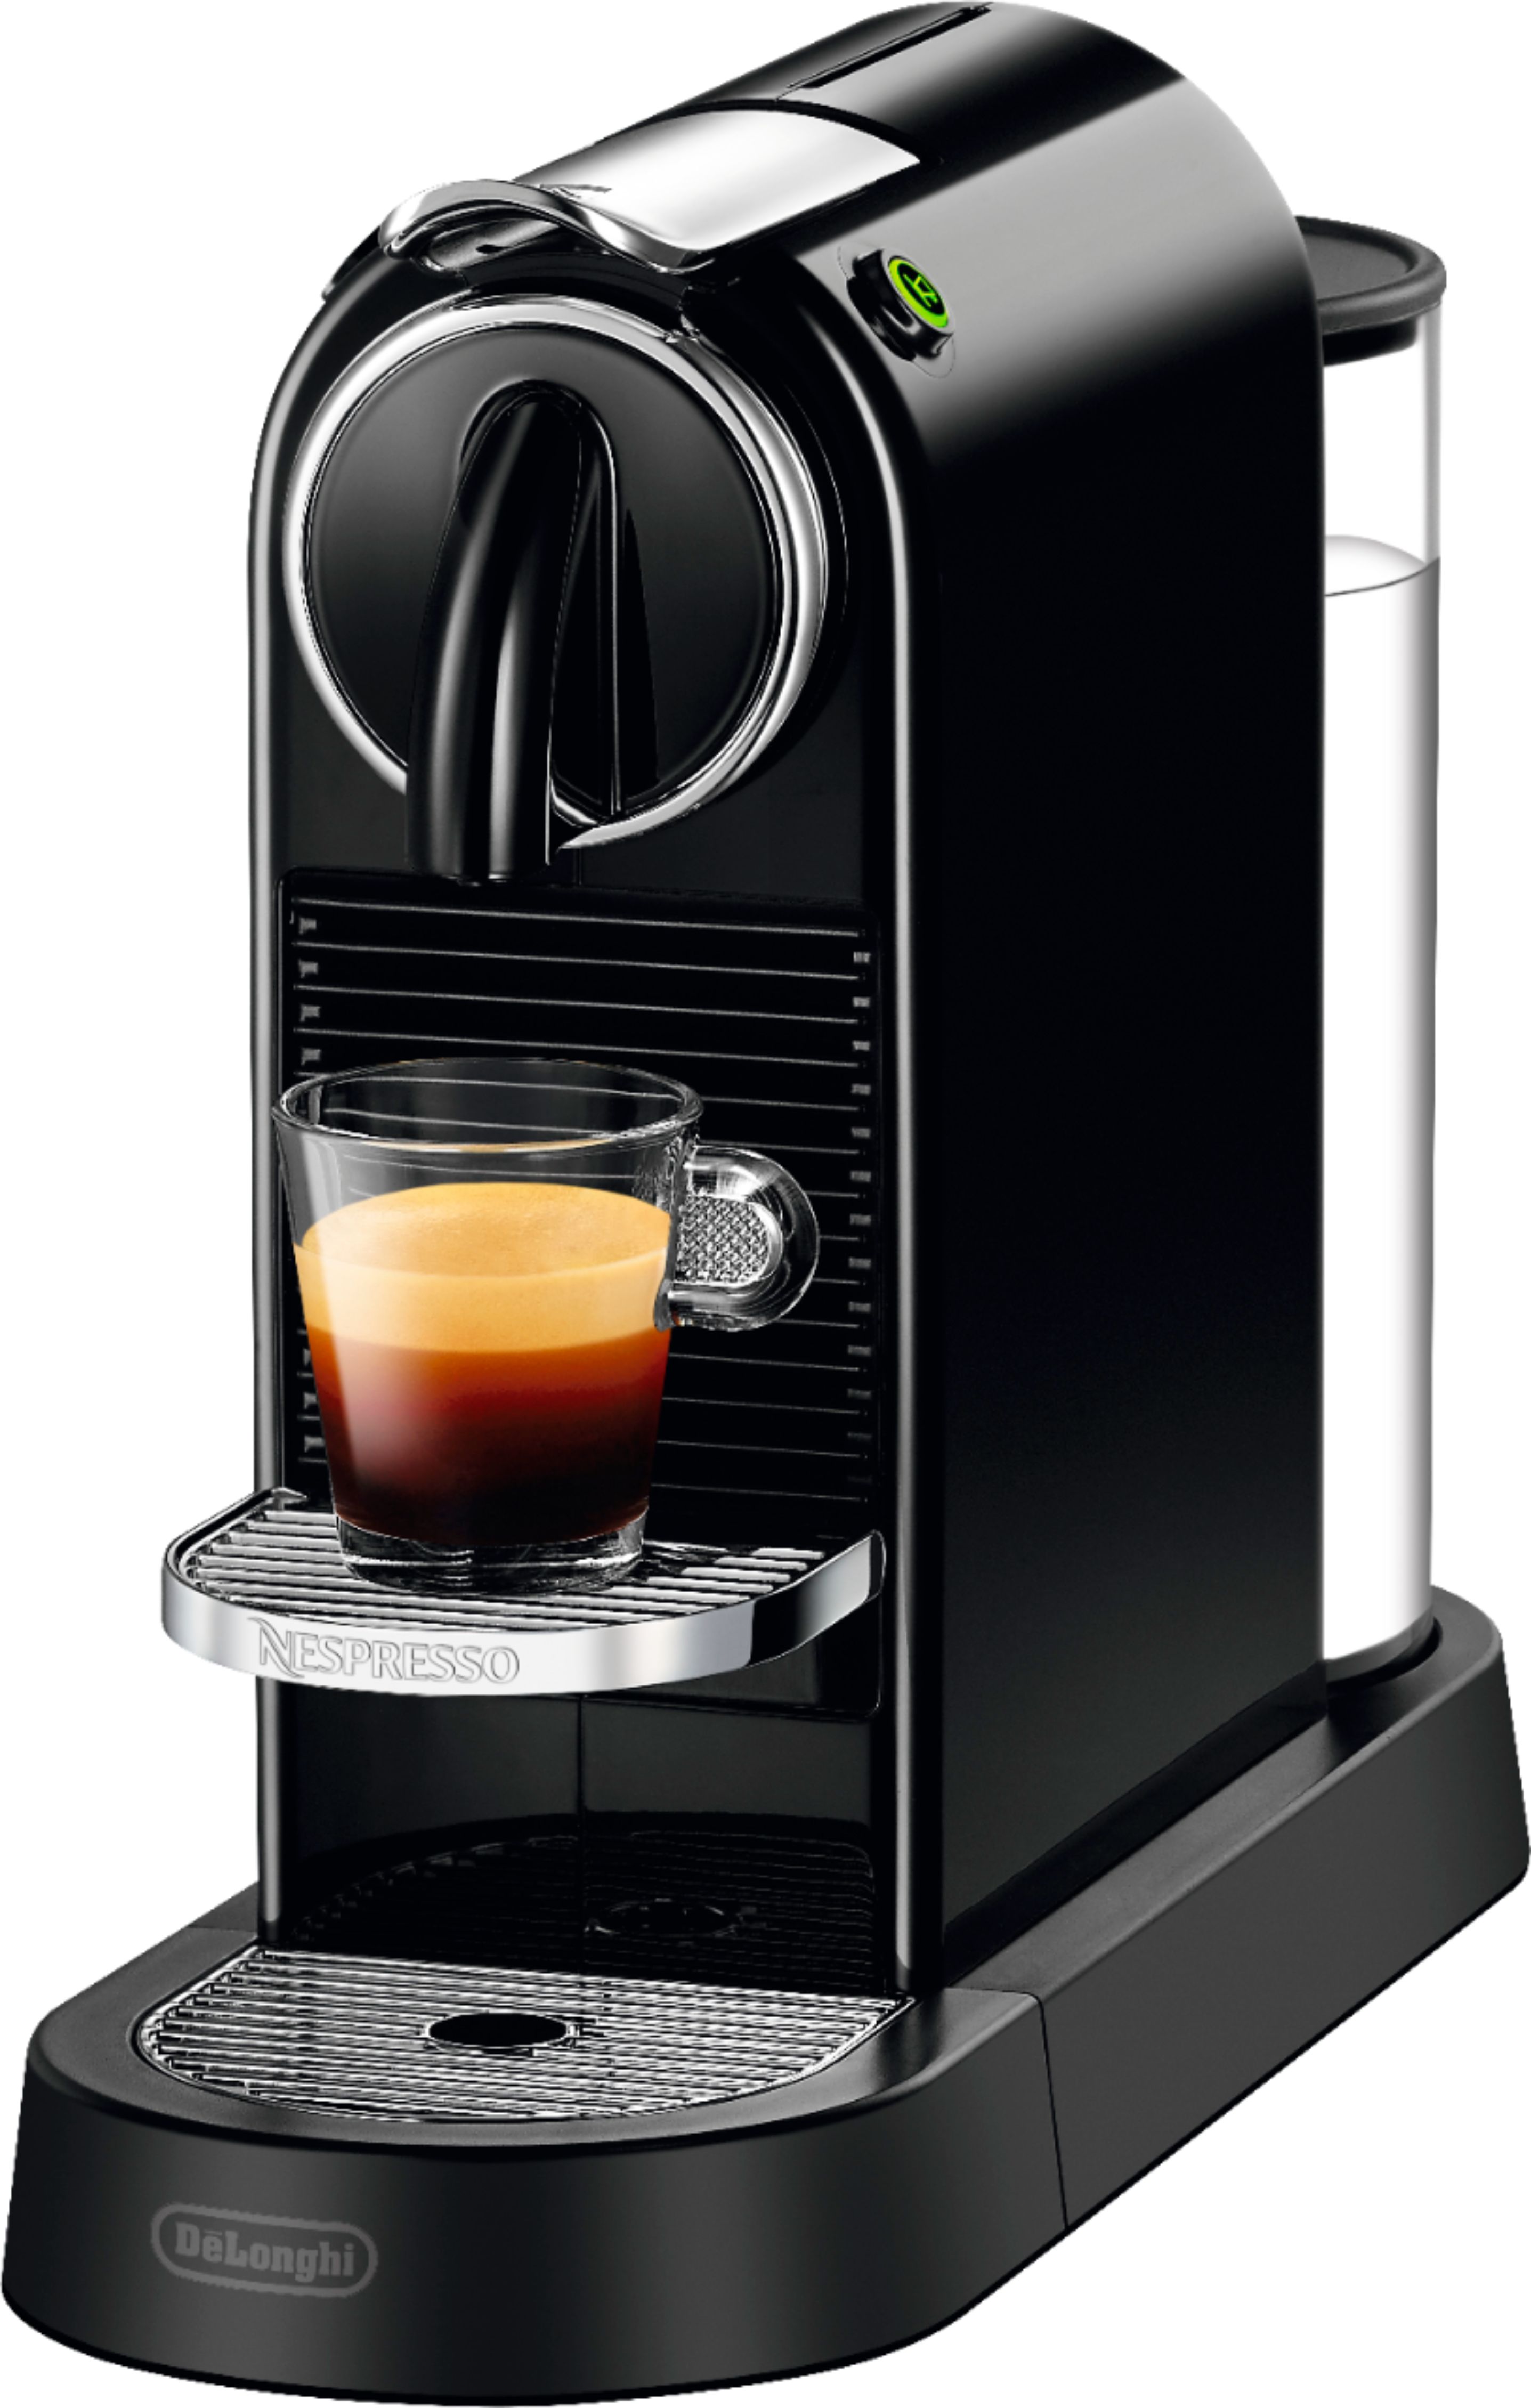 Angle View: De'Longhi - Nespresso CitiZ&milk Espresso Machine by De'Longhi, Limousine Black - Limousine Black